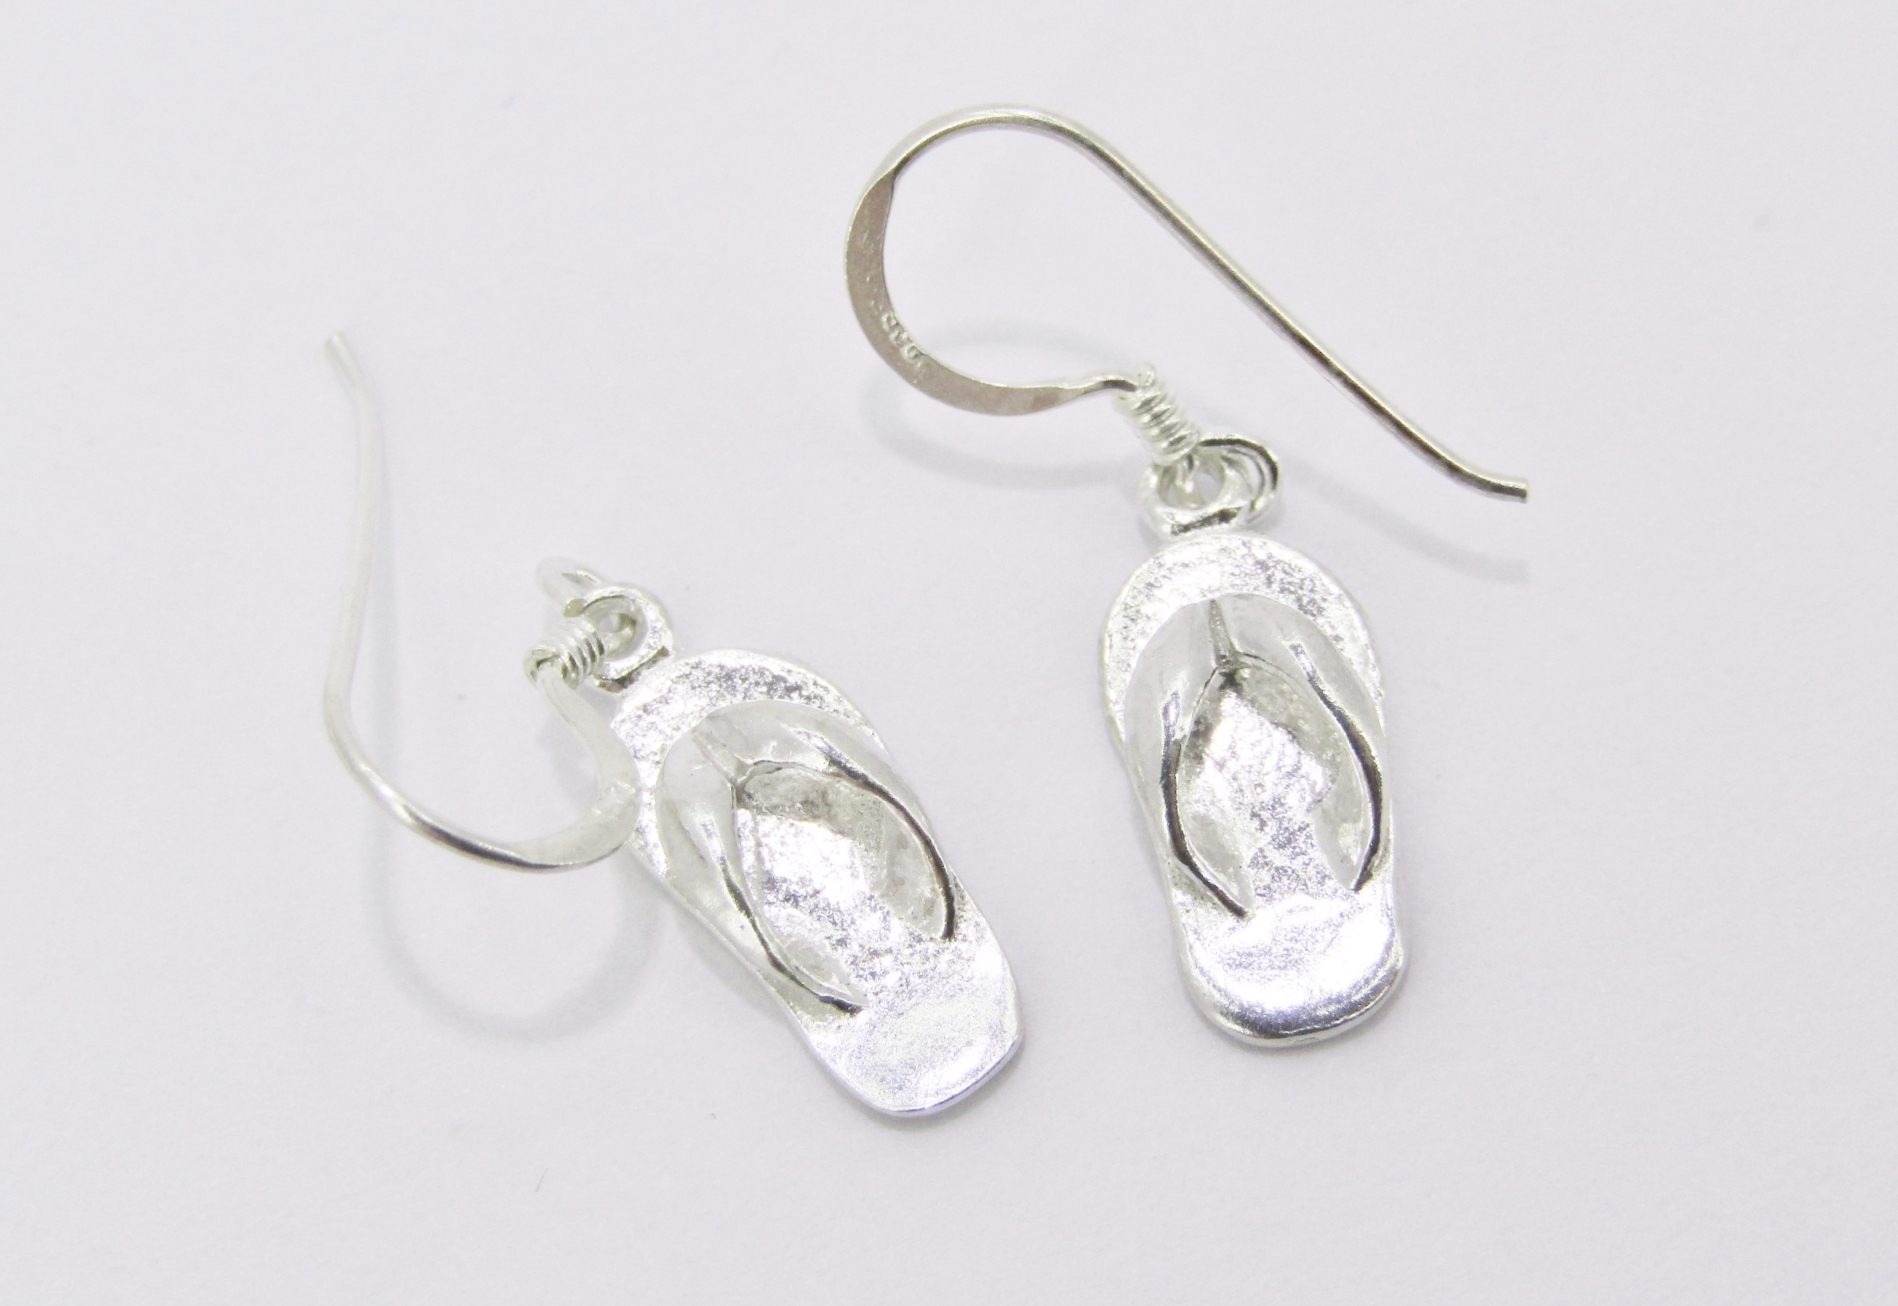 A Lovely Pair of Slip Slops Earrings in Sterling Silver.